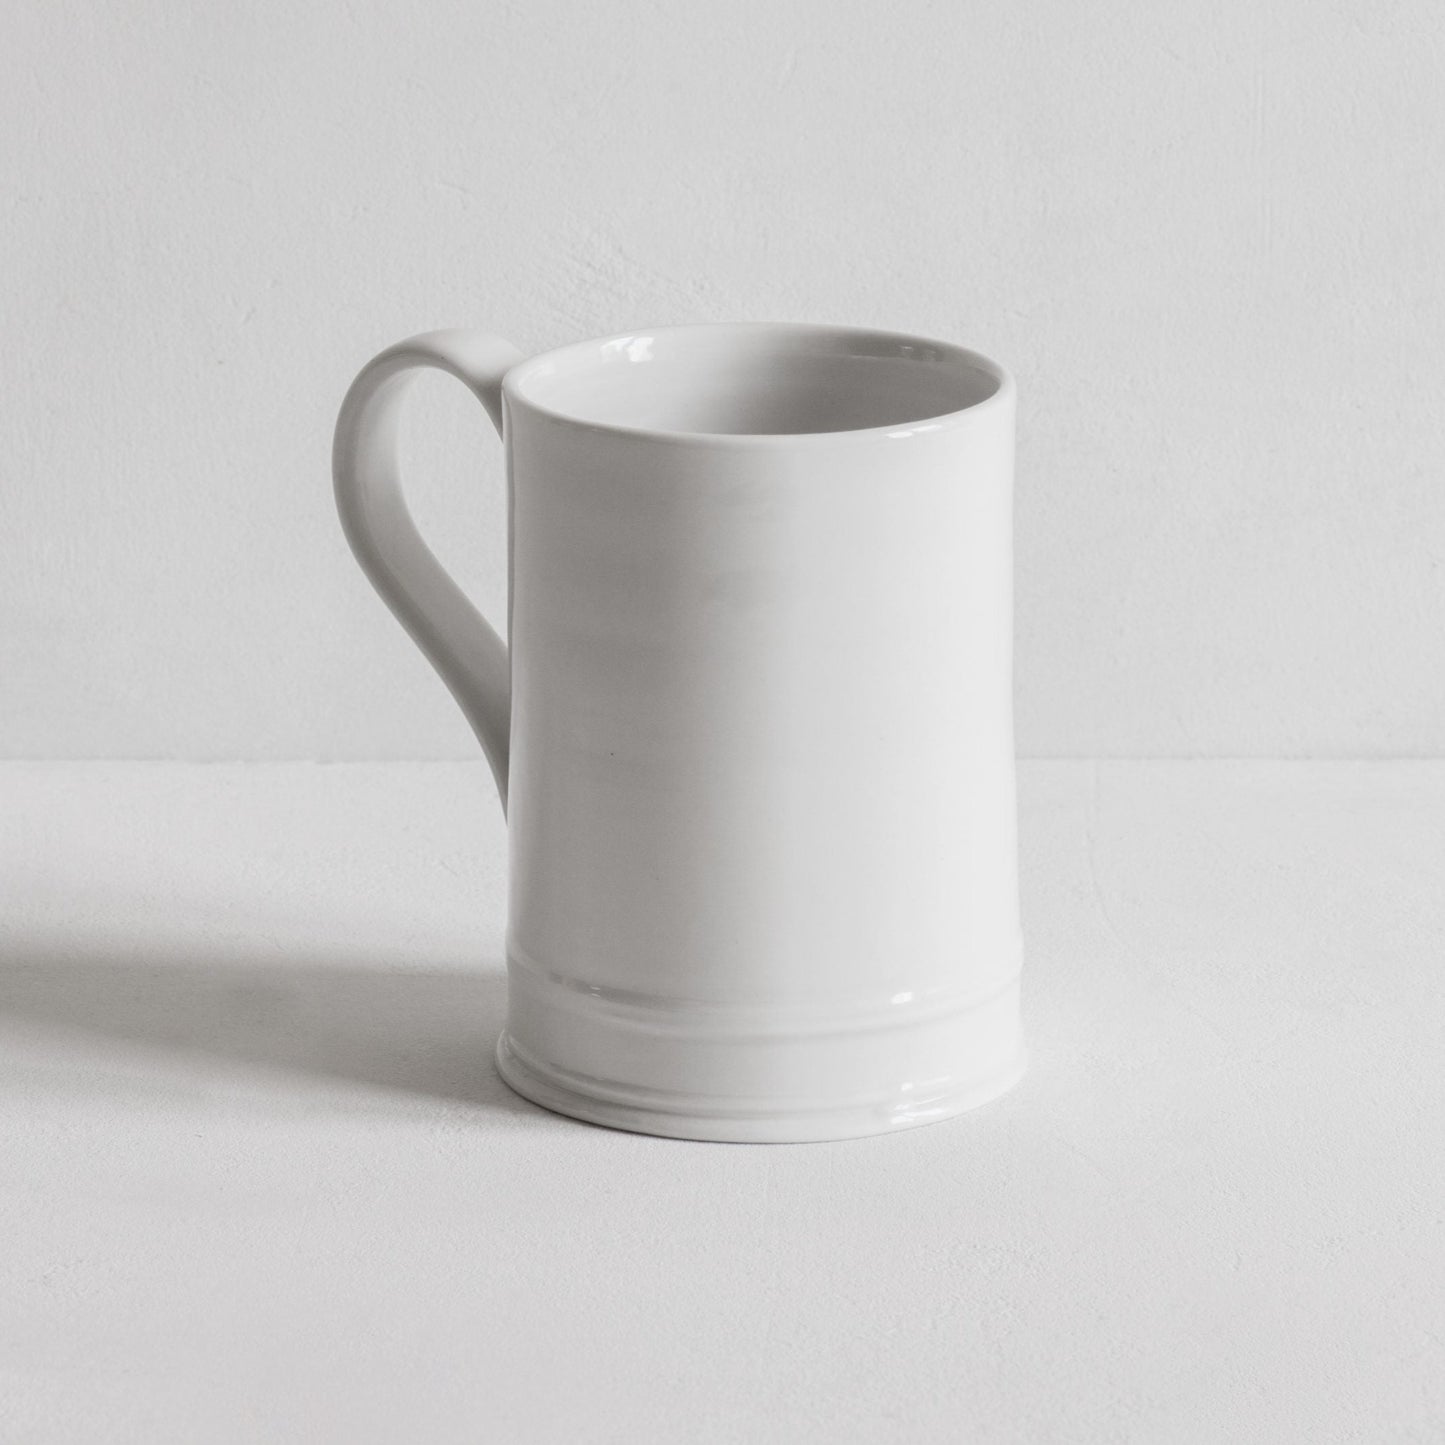 Classical hand thrown mug in porcelain